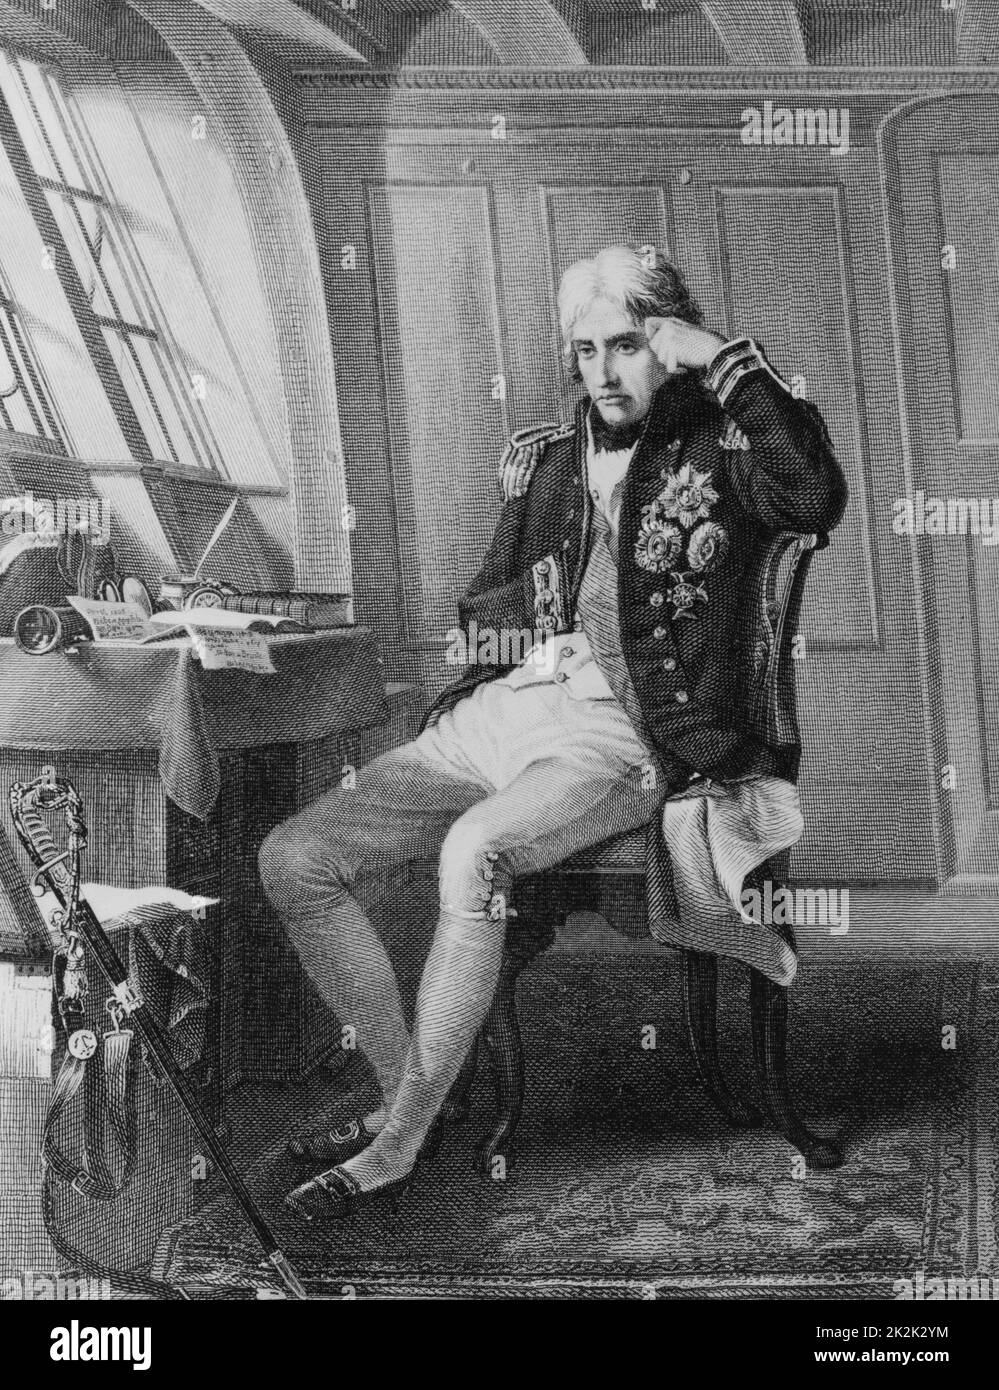 Britischer Vizeadmiral Horatio Nelson, Offizier der Royal Navy. Gravur datiert 1873 Stockfoto